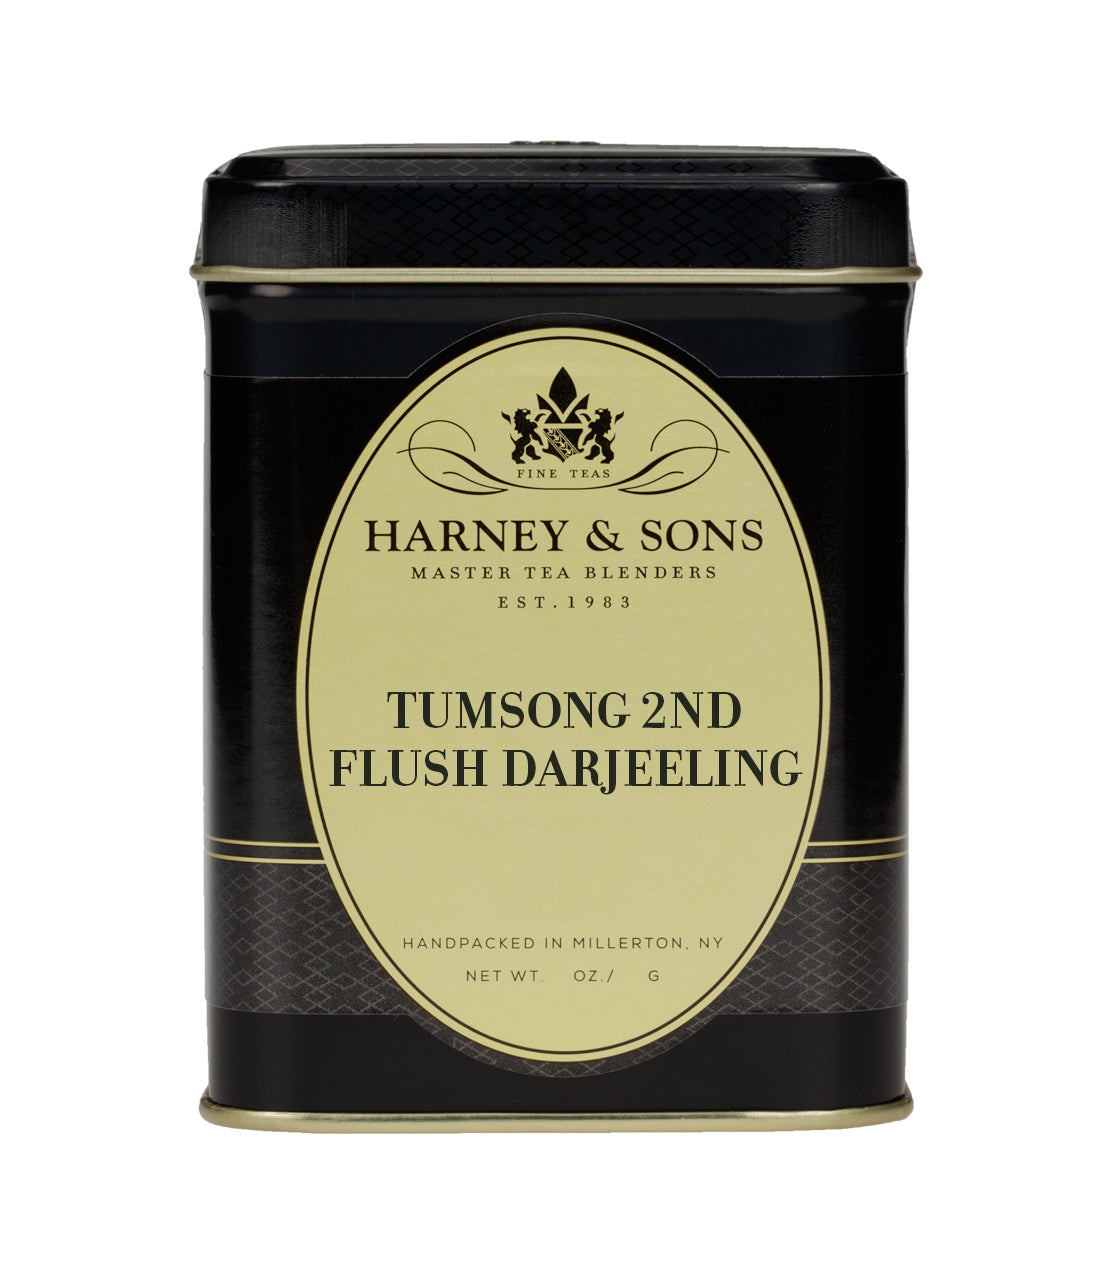 Tumsong 2nd Flush Darjeeling - Loose 3 oz. Tin - Harney & Sons Fine Teas